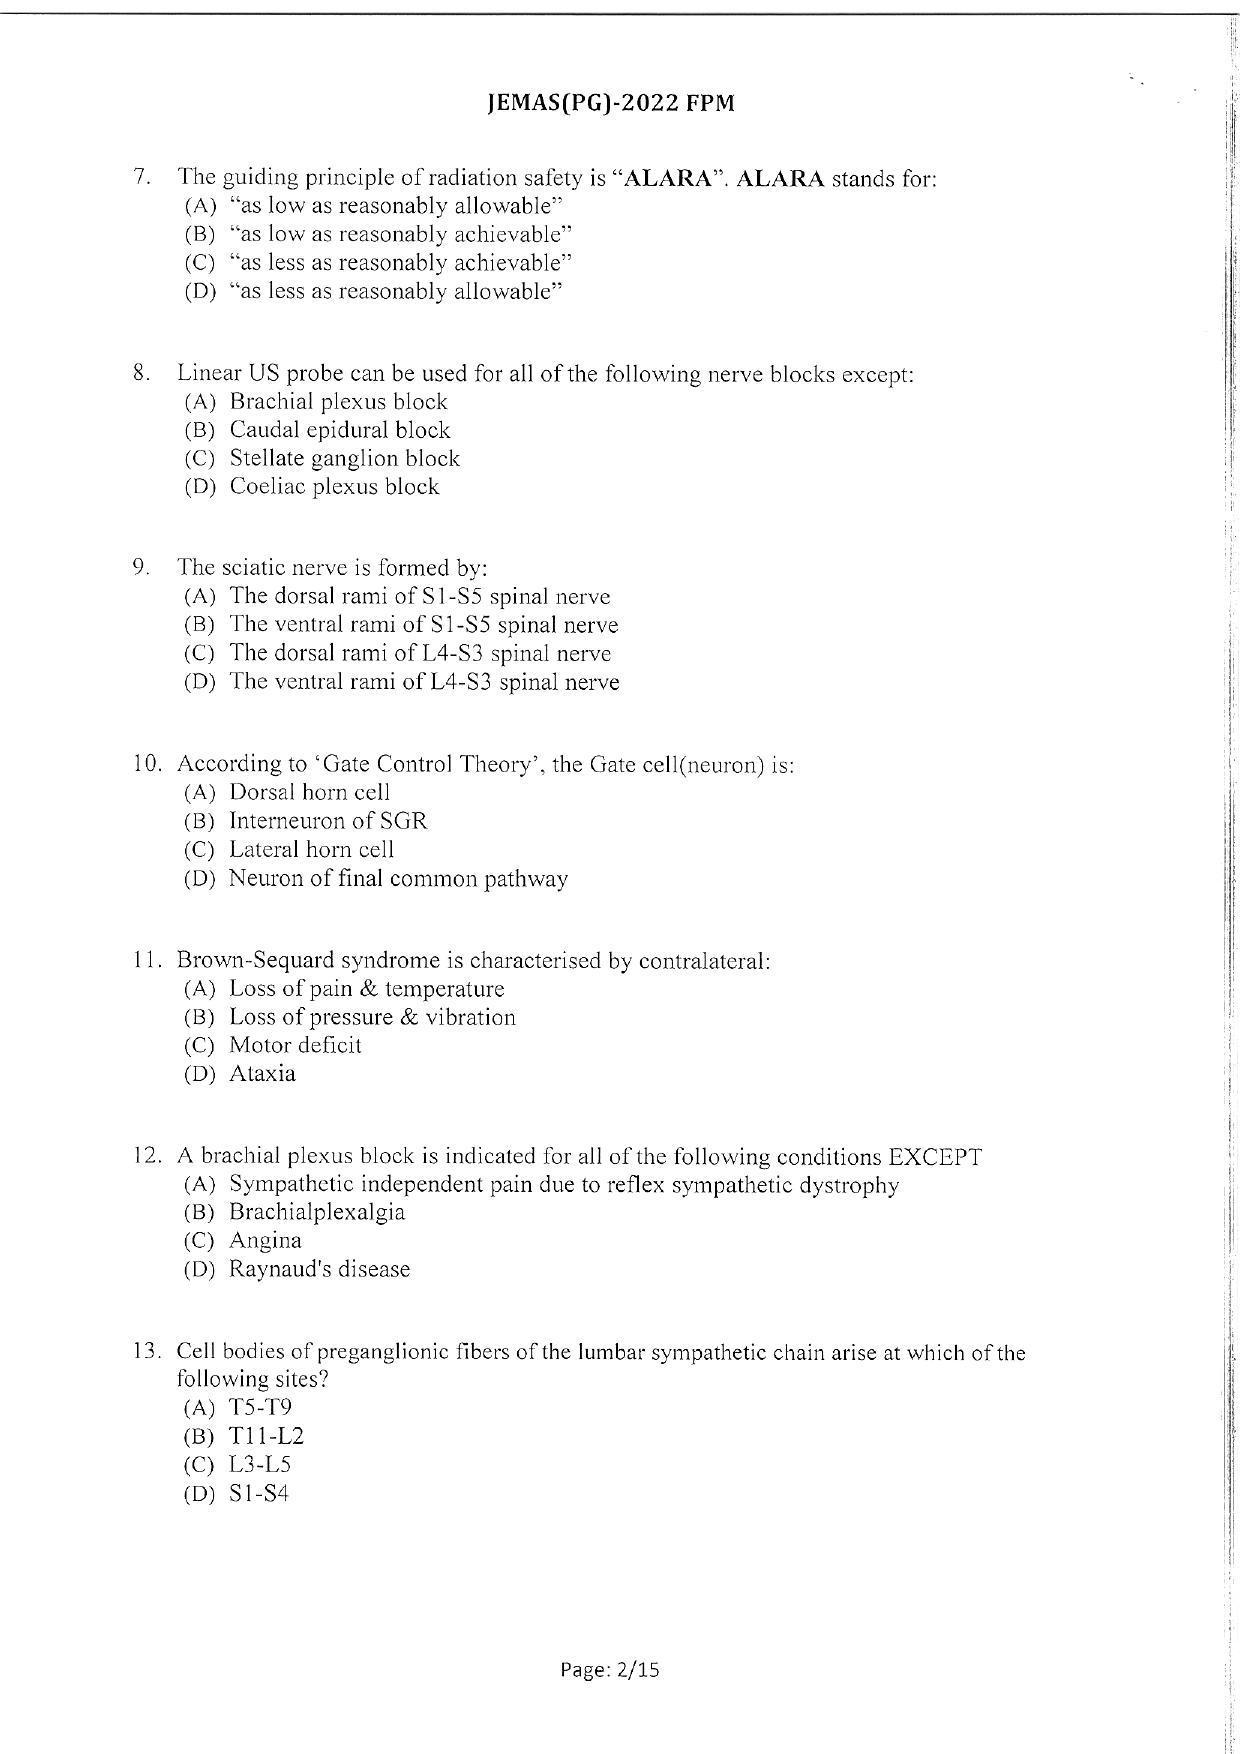 WBJEEB JEMAS (PG) 2022 FPM Question Paper - Page 4